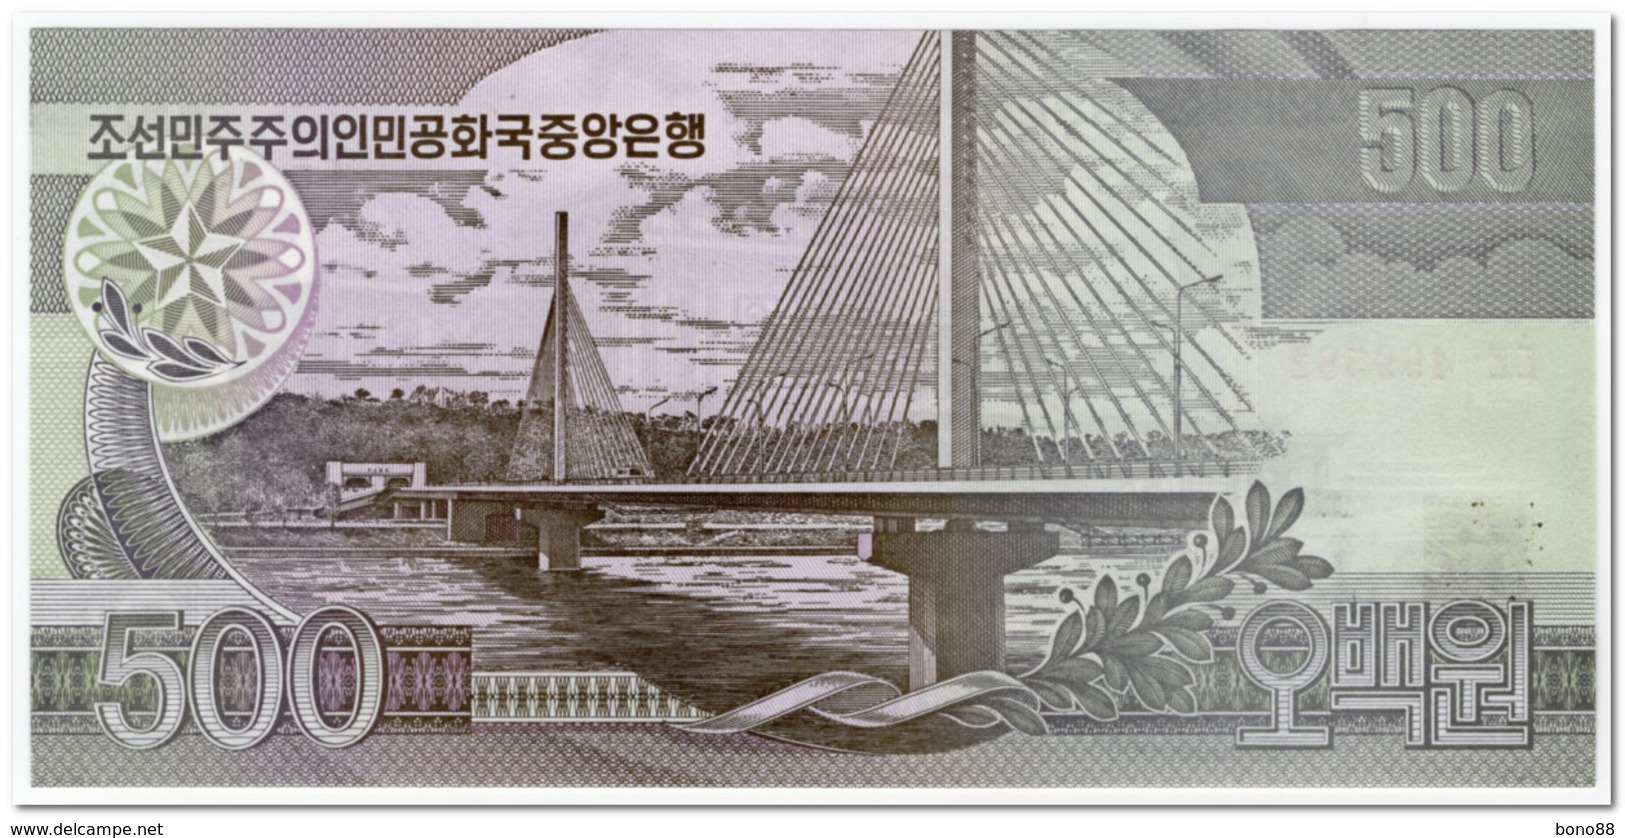 NORTH KOREA,500 WON,1998,P.44,UNC - Corea Del Norte